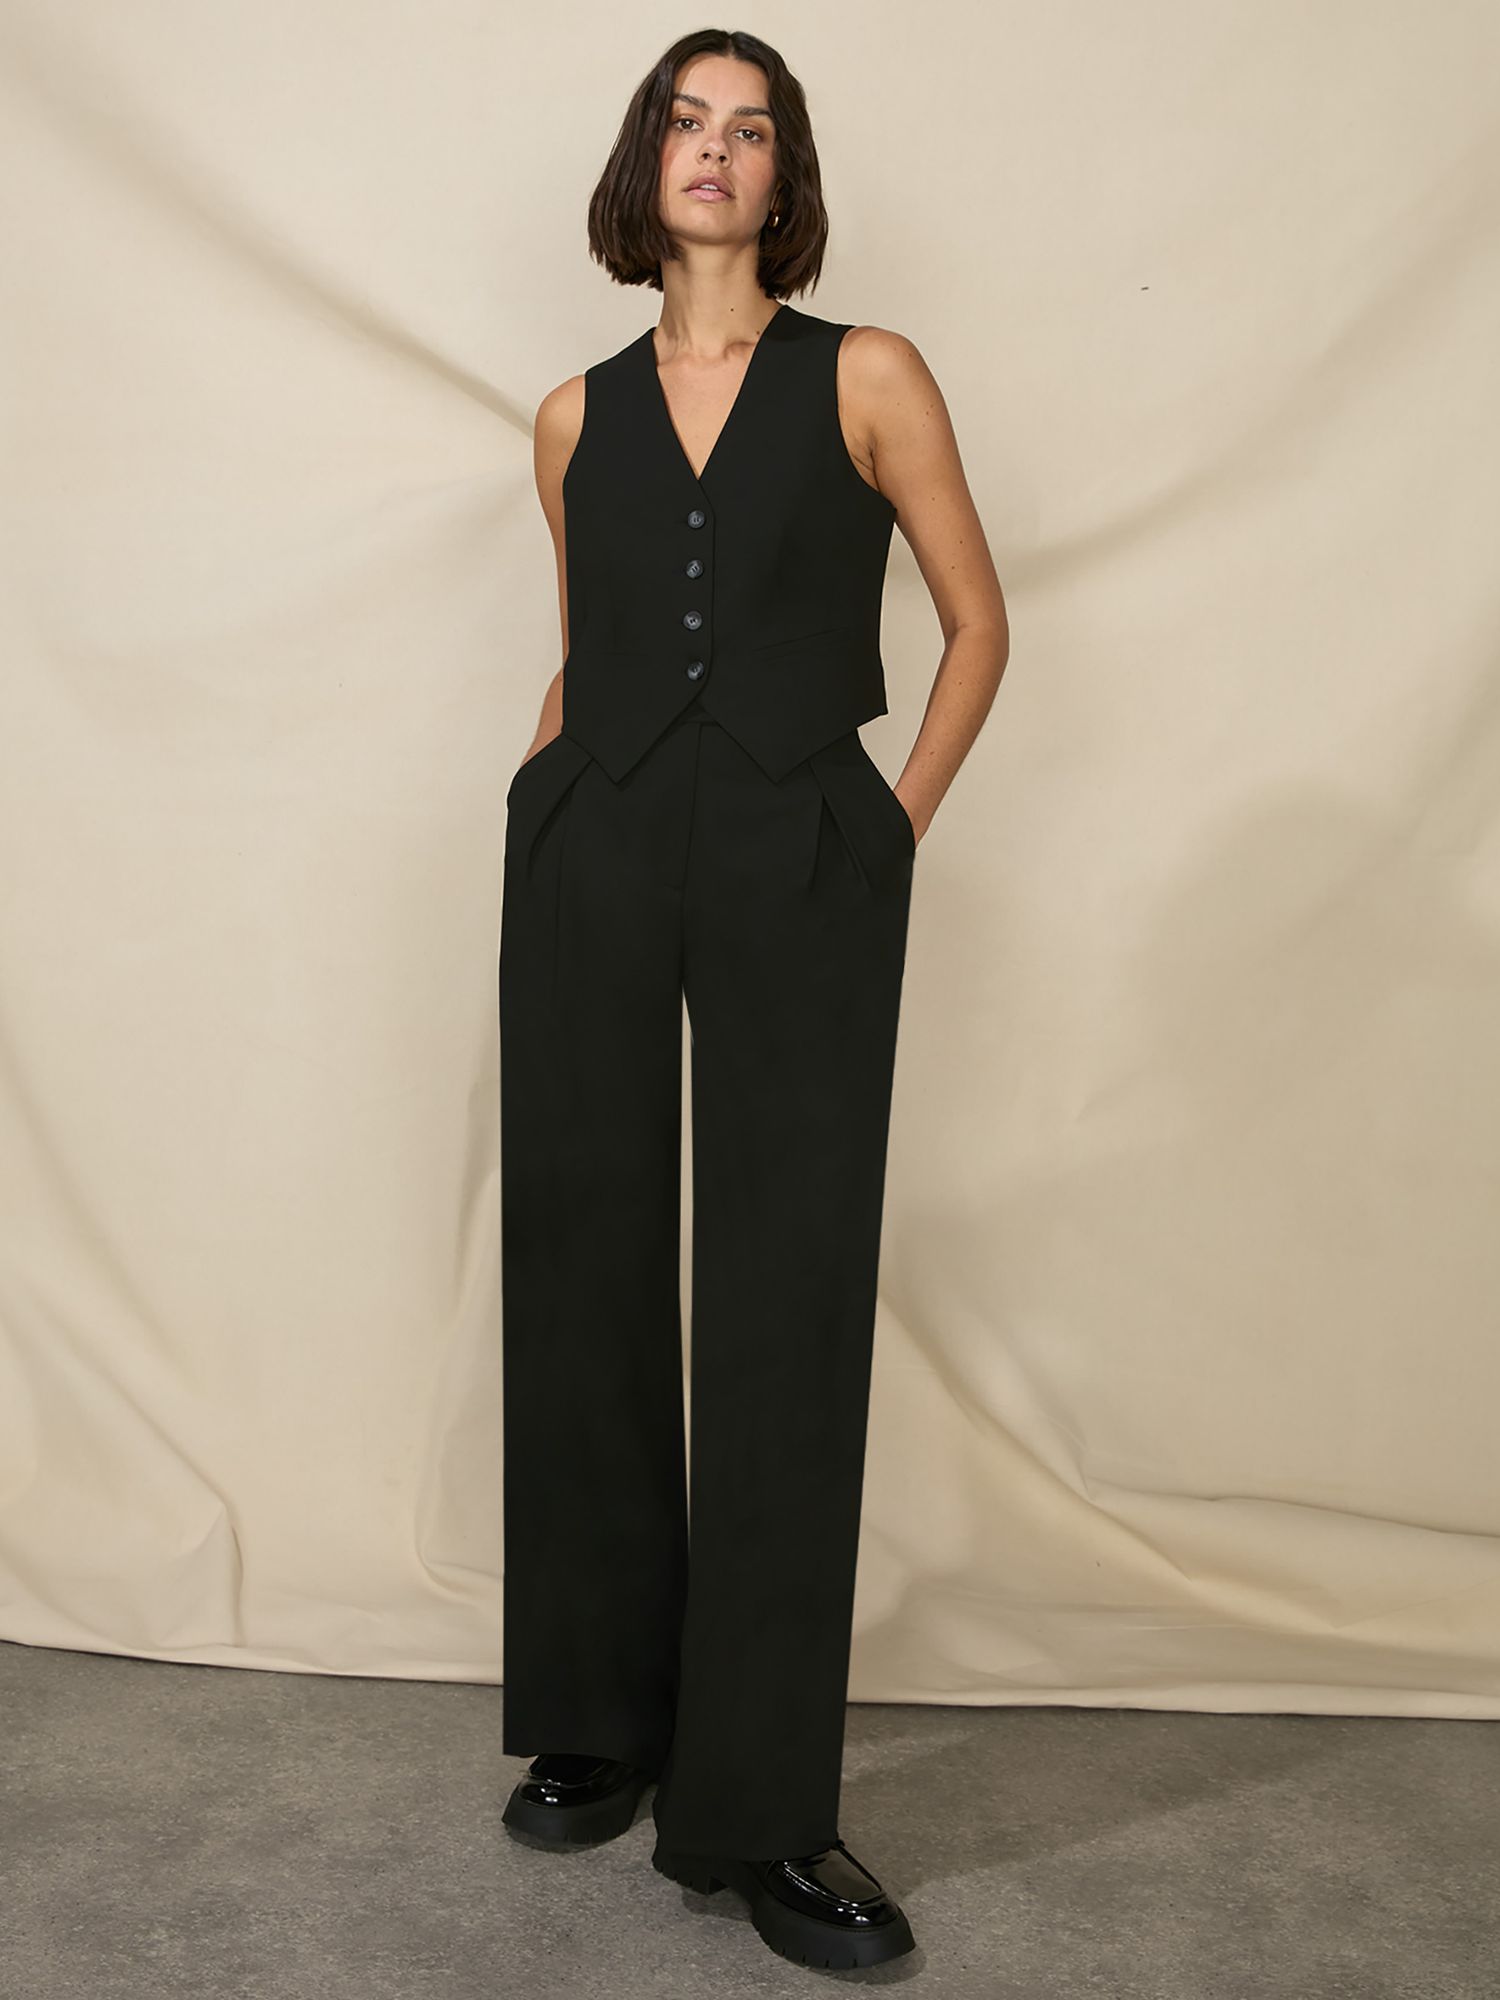 Ro&Zo Petite Pleat Detail Tailored Trousers, Black at John Lewis & Partners